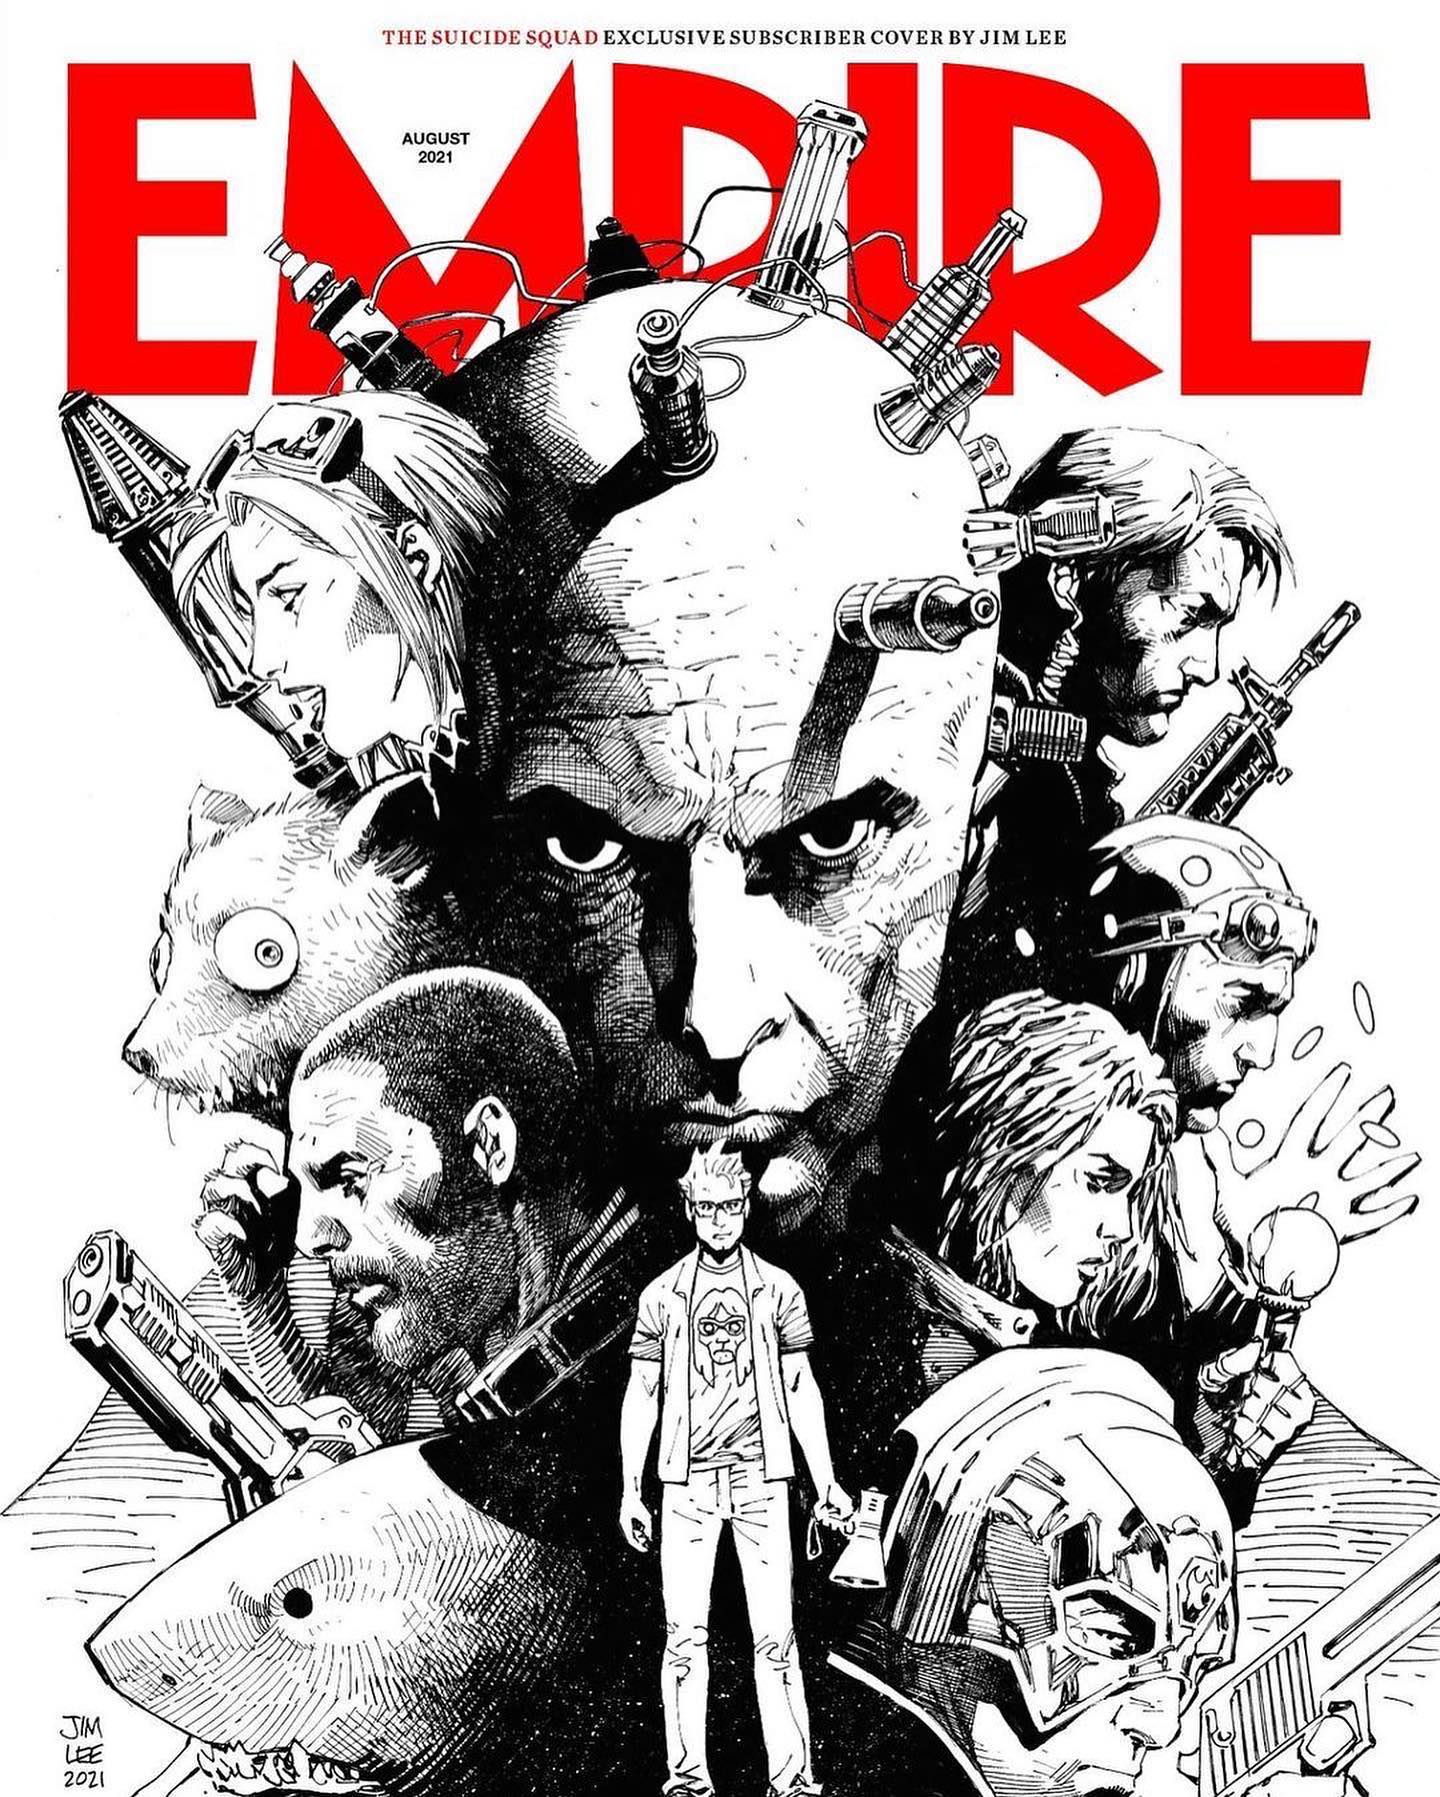 The Suicide Squad - Empire Magazine Cover - August 2021